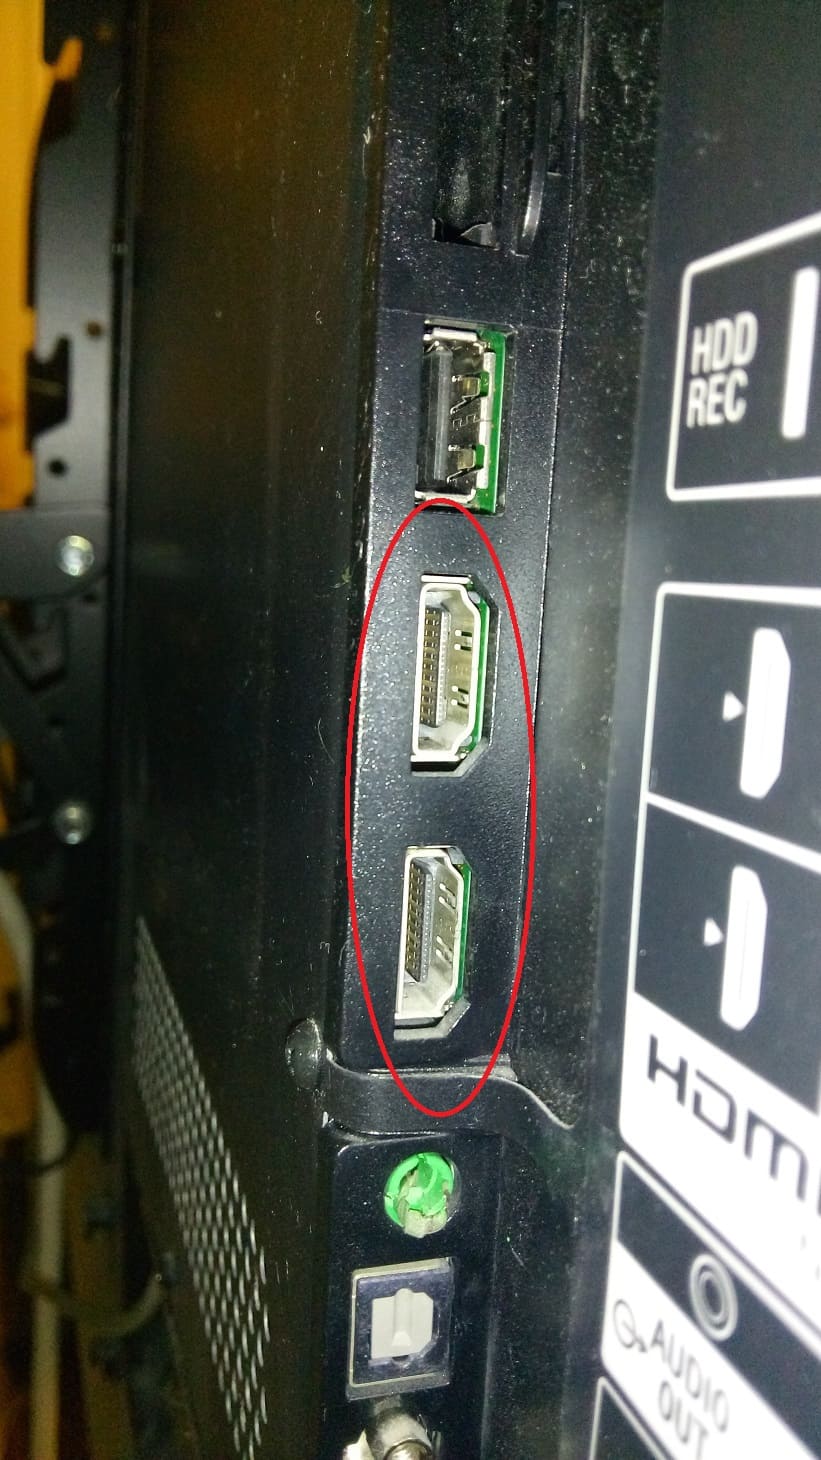 Connecting a TV to a computer via hdmi